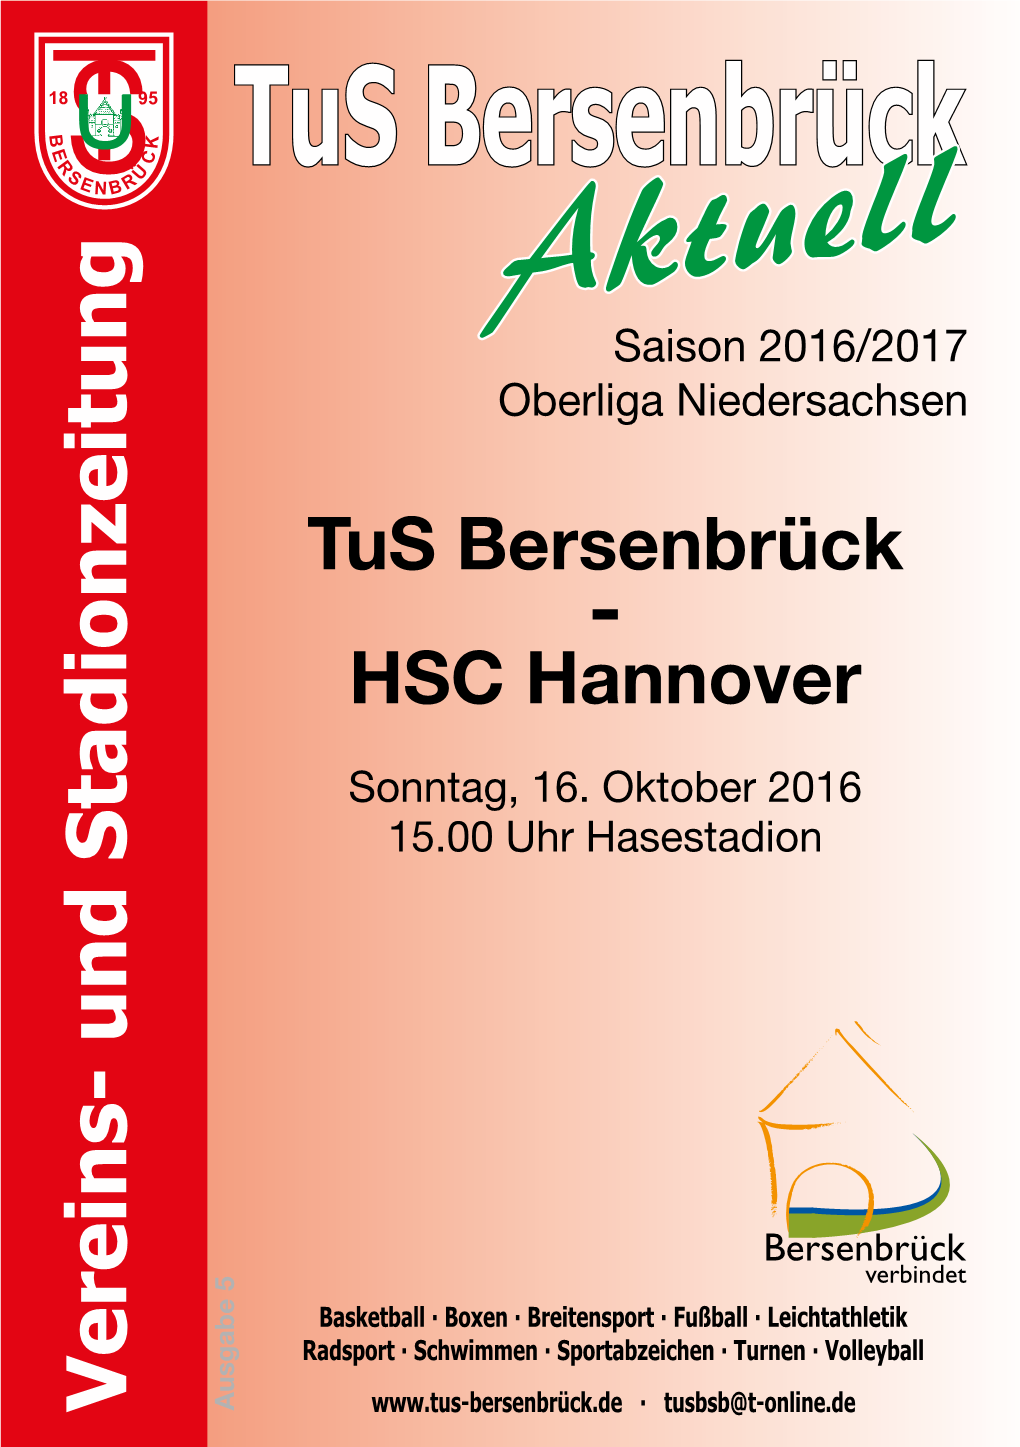 Tus Bersenbrück HSC Hannover